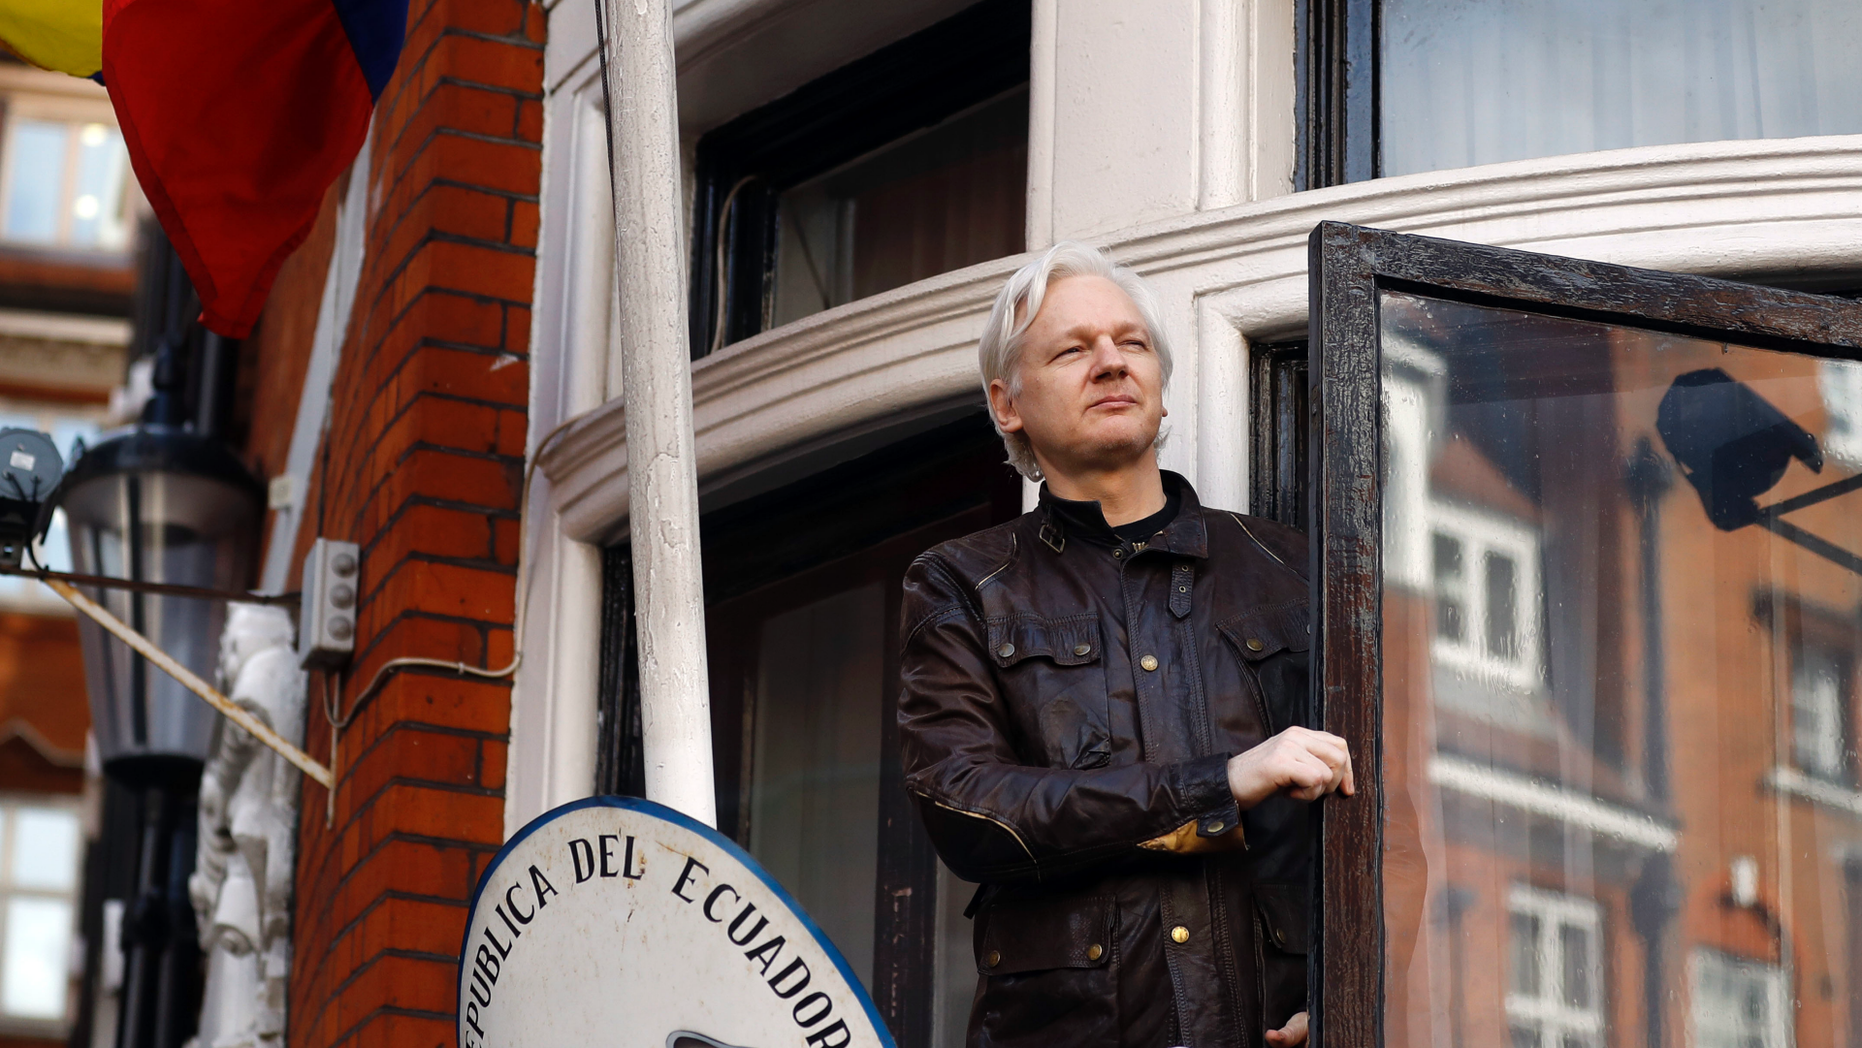 Ecuador removes official over close Assange relationship 8be800c5-ContentBroker_contentid-dcc665da1f764ca08bff6284e6becfd7